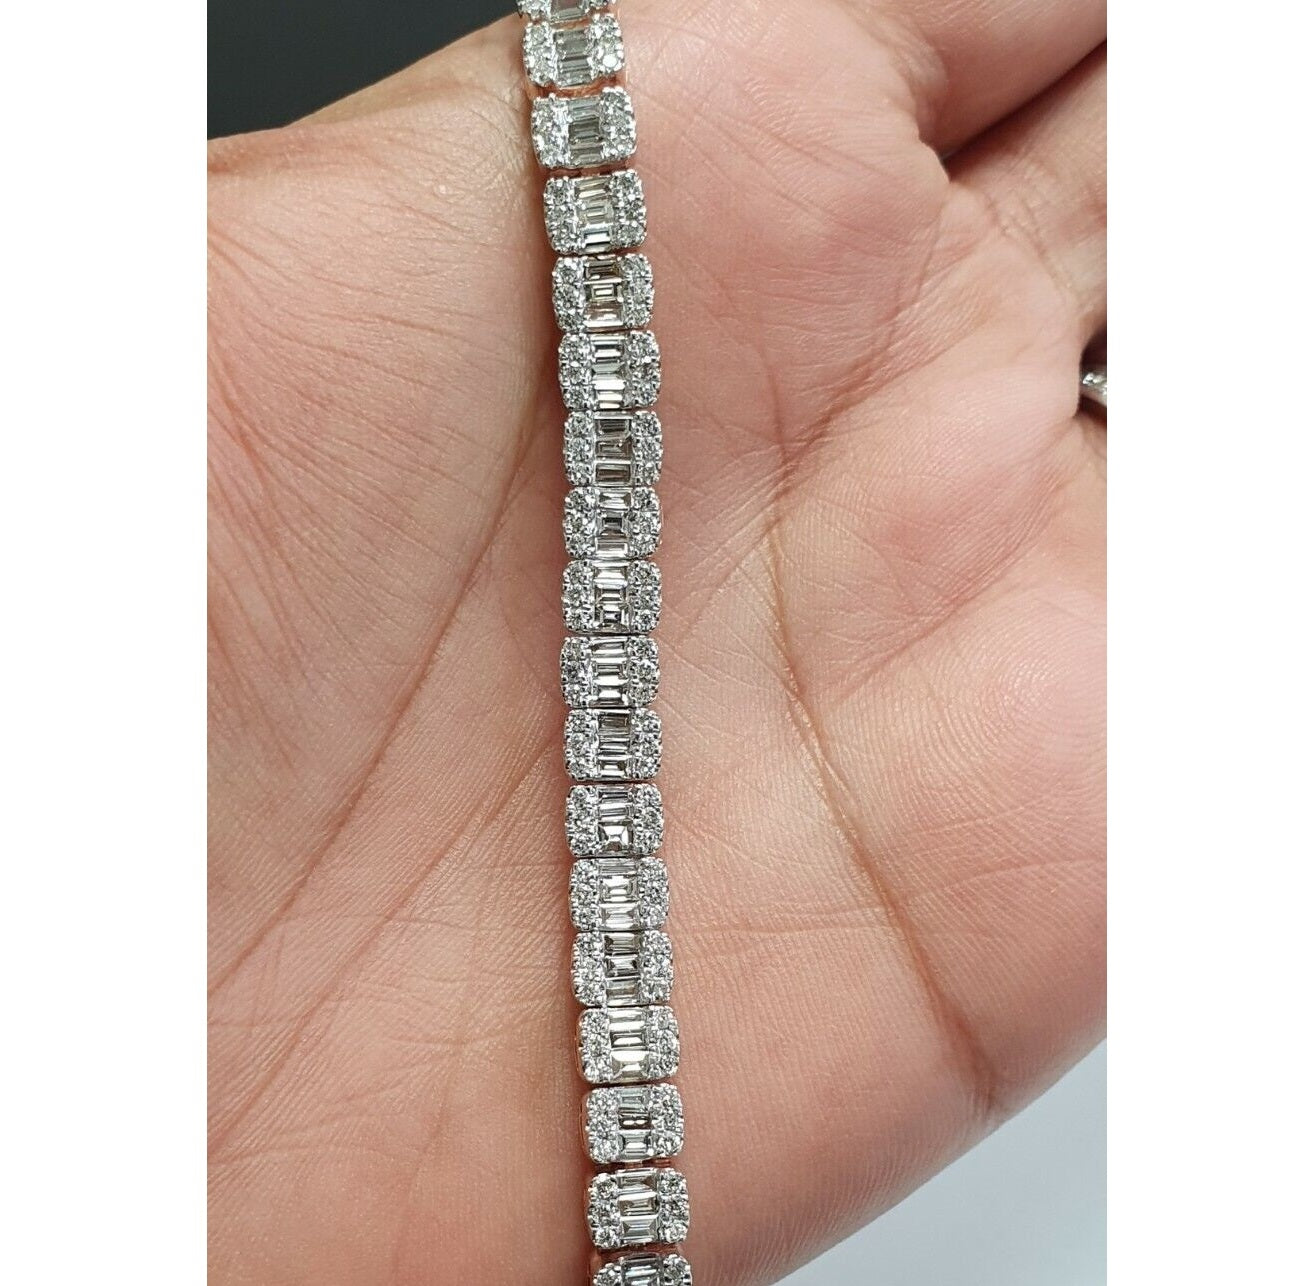 F/VS Natural Baguette & Round Diamond Designer Bracelet for Women's in Hallmarked Gold - 5.00Ct - 7inches